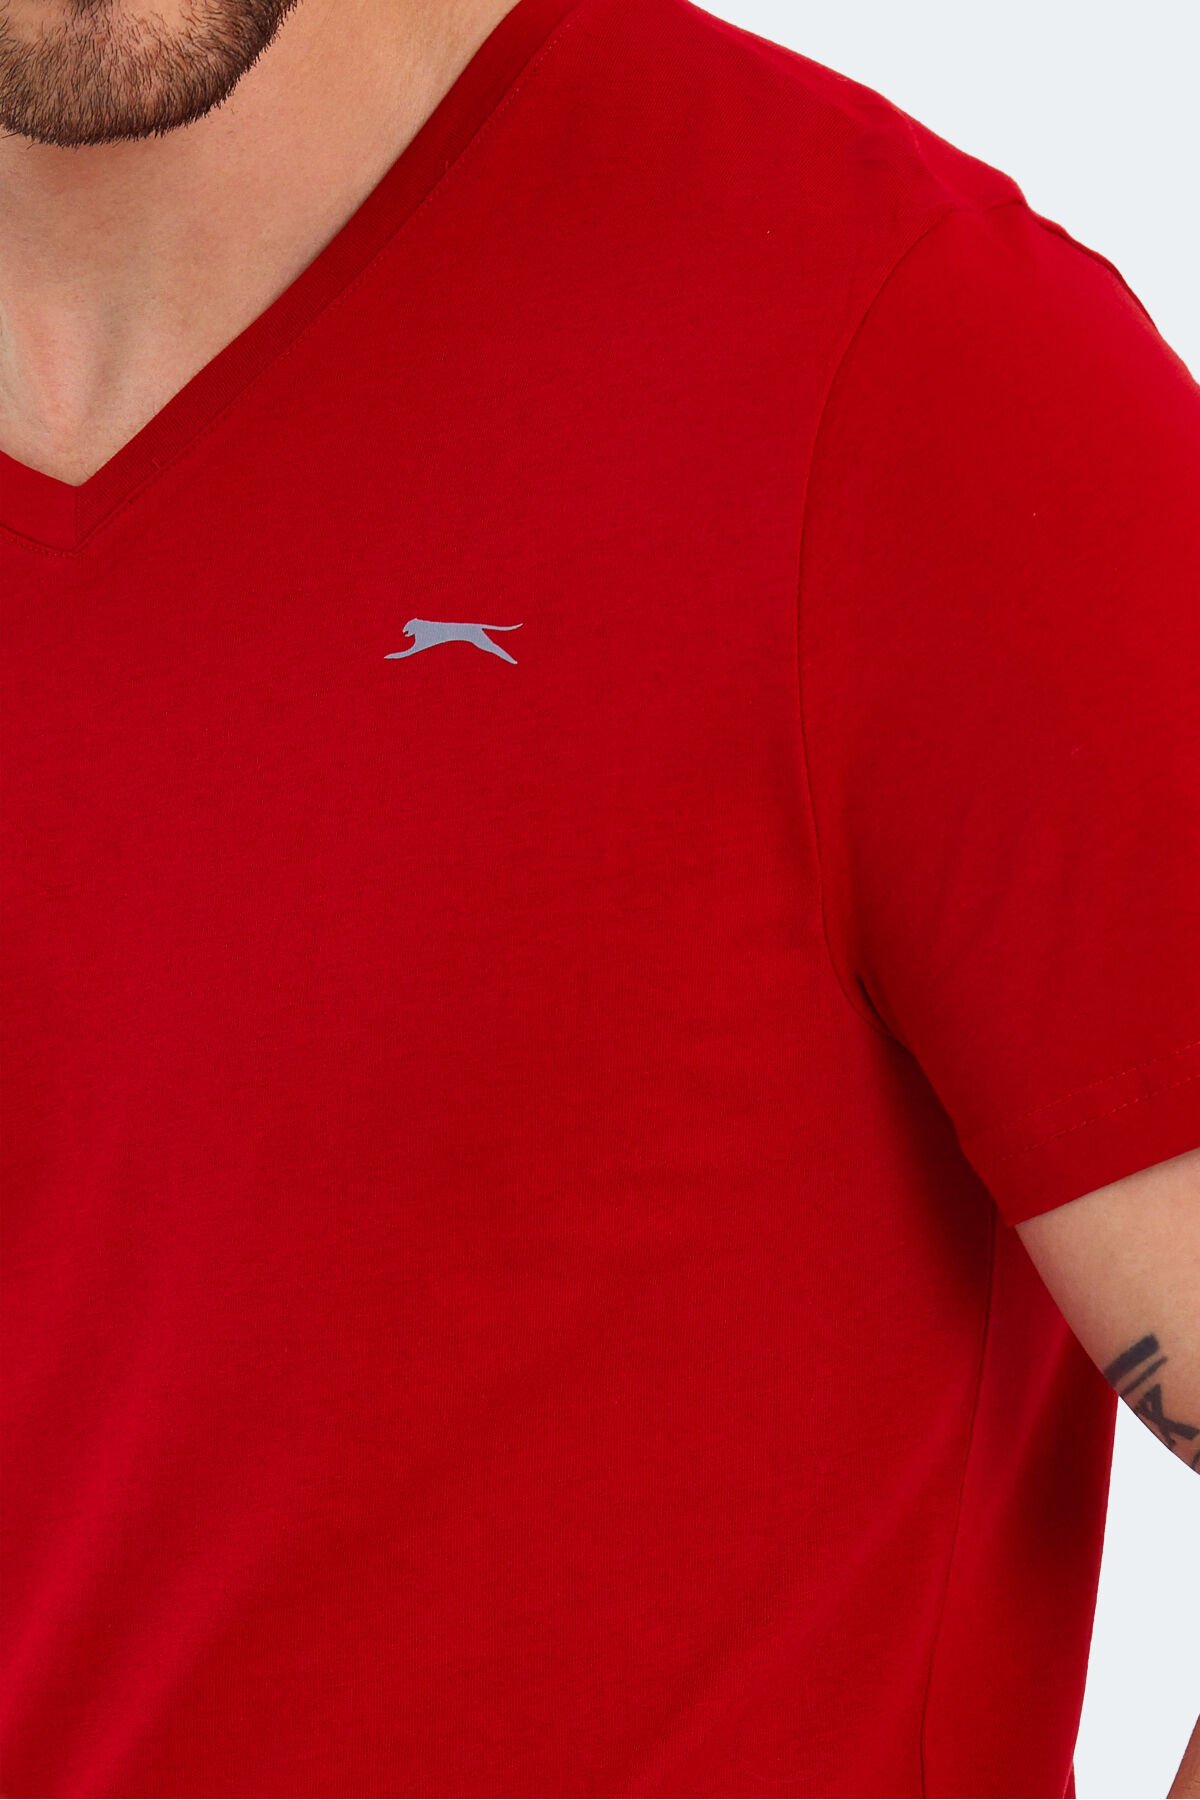 Slazenger RIVALDO Erkek Kısa Kol T-Shirt Kırmızı - Thumbnail